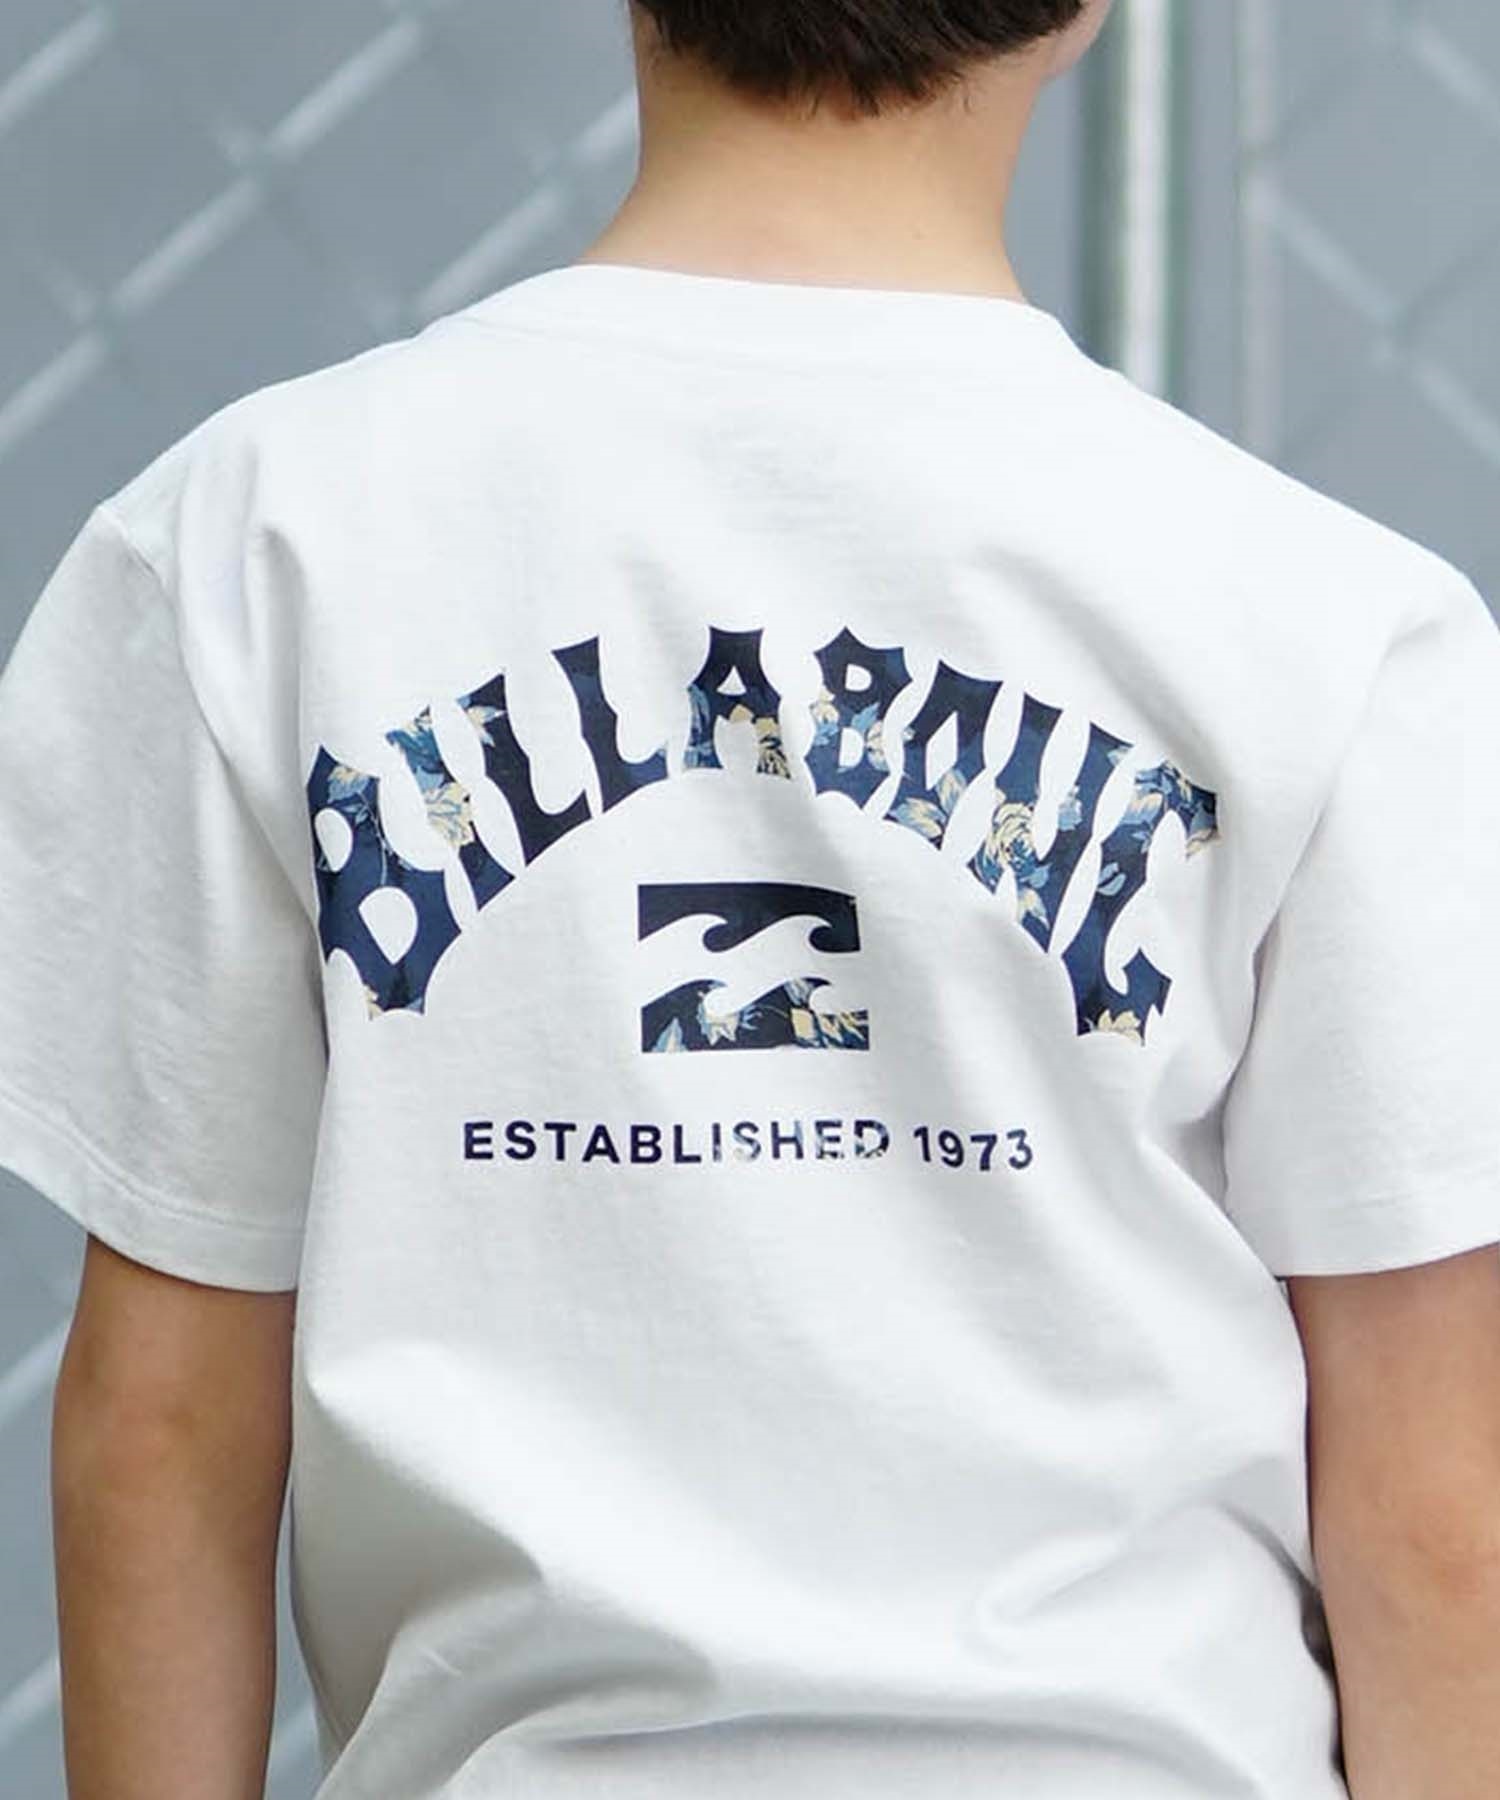 BILLABONG ビラボン ARCH FILL キッズ 半袖 Tシャツ バックプリント BE015-200(IND-130cm)